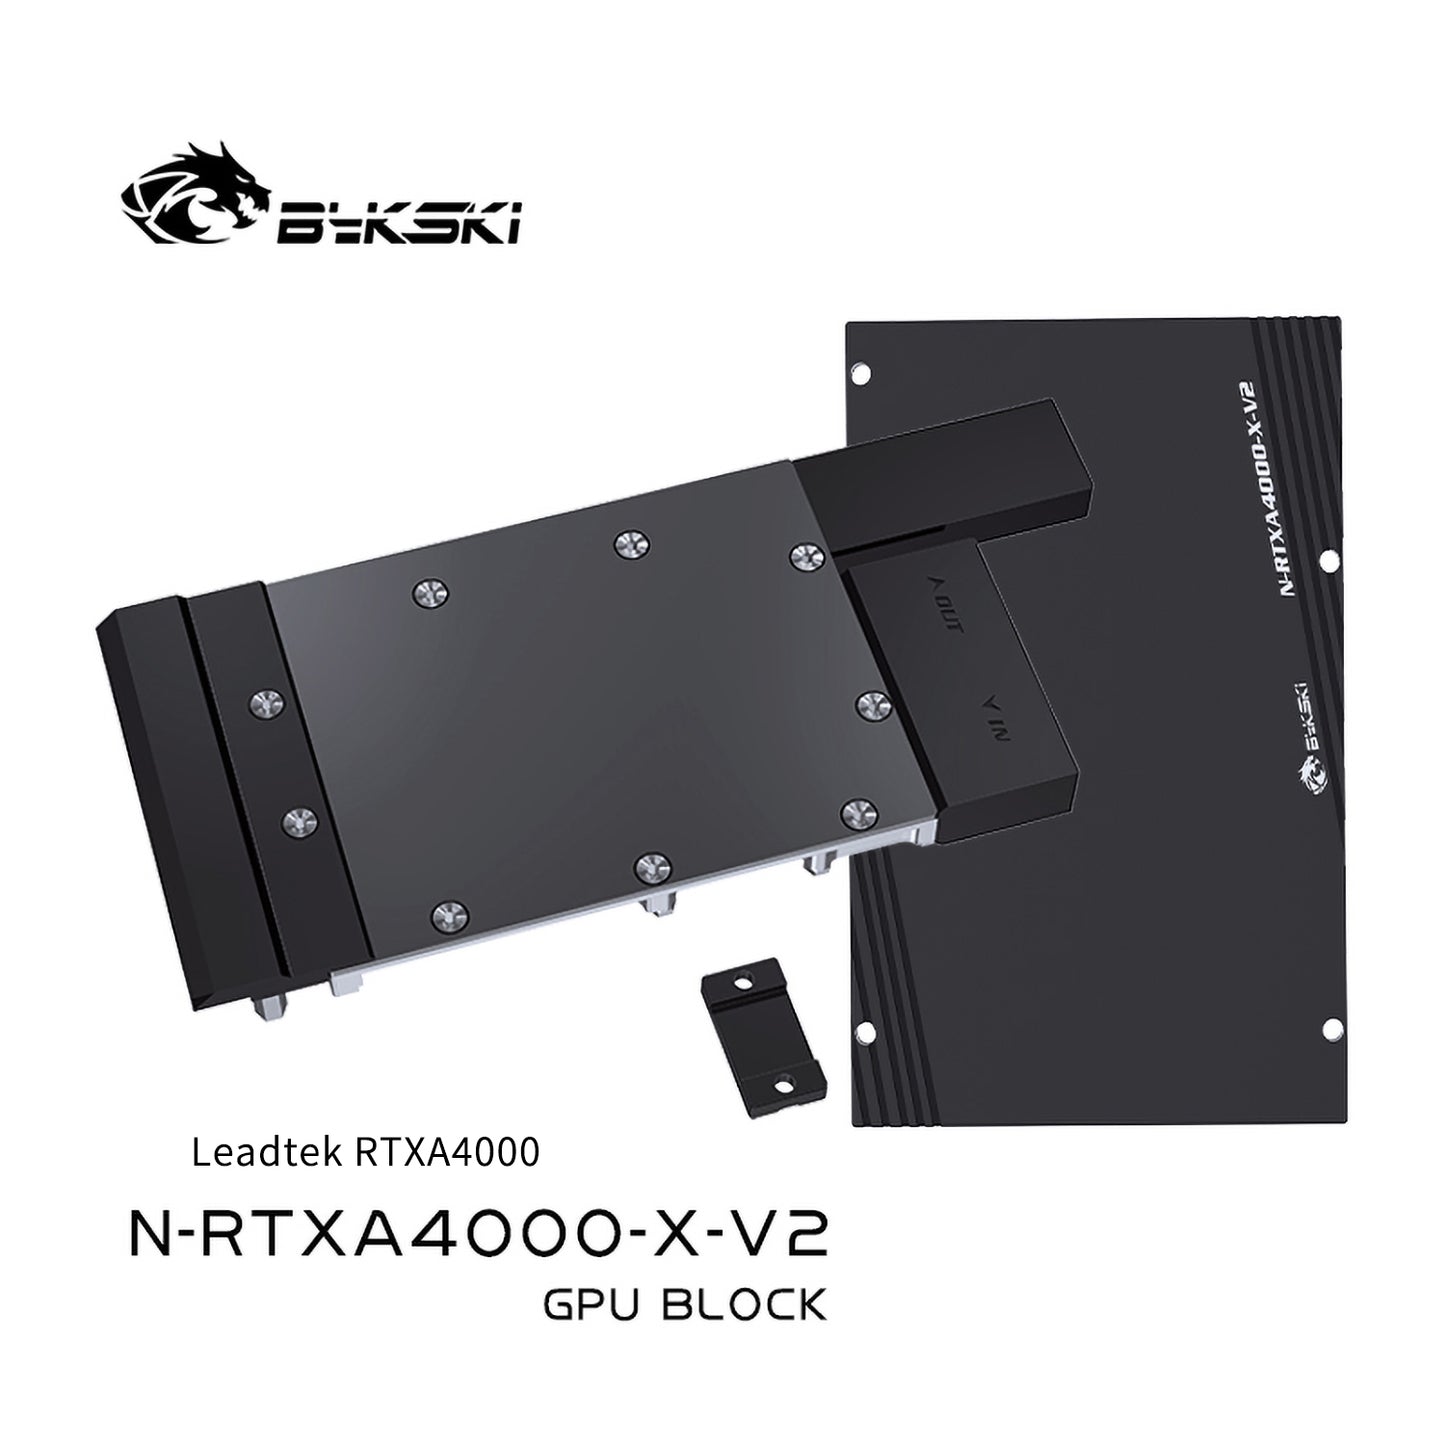 Bykski GPU Block For Leadtek RTXA4000, High Heat Resistance Material POM + Full Metal Construction, With Backplate Full Cover GPU Water Cooling Cooler Radiator Block N-RTXA4000-X-V2